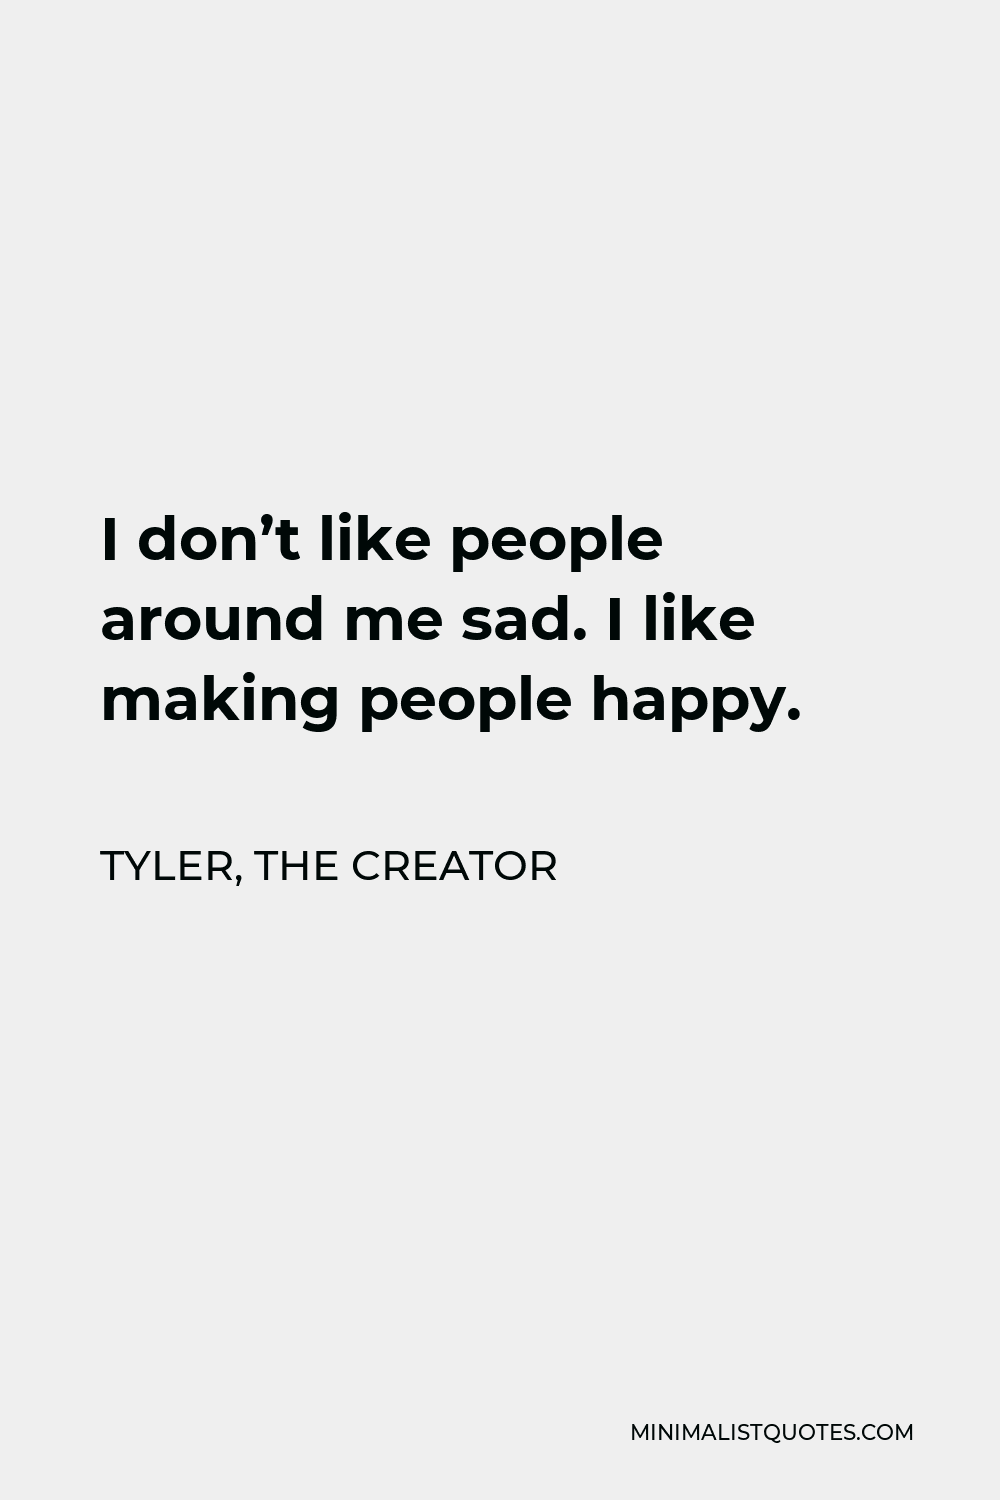 Tyler, the Creator Quote - I don’t like people around me sad. I like making people happy.